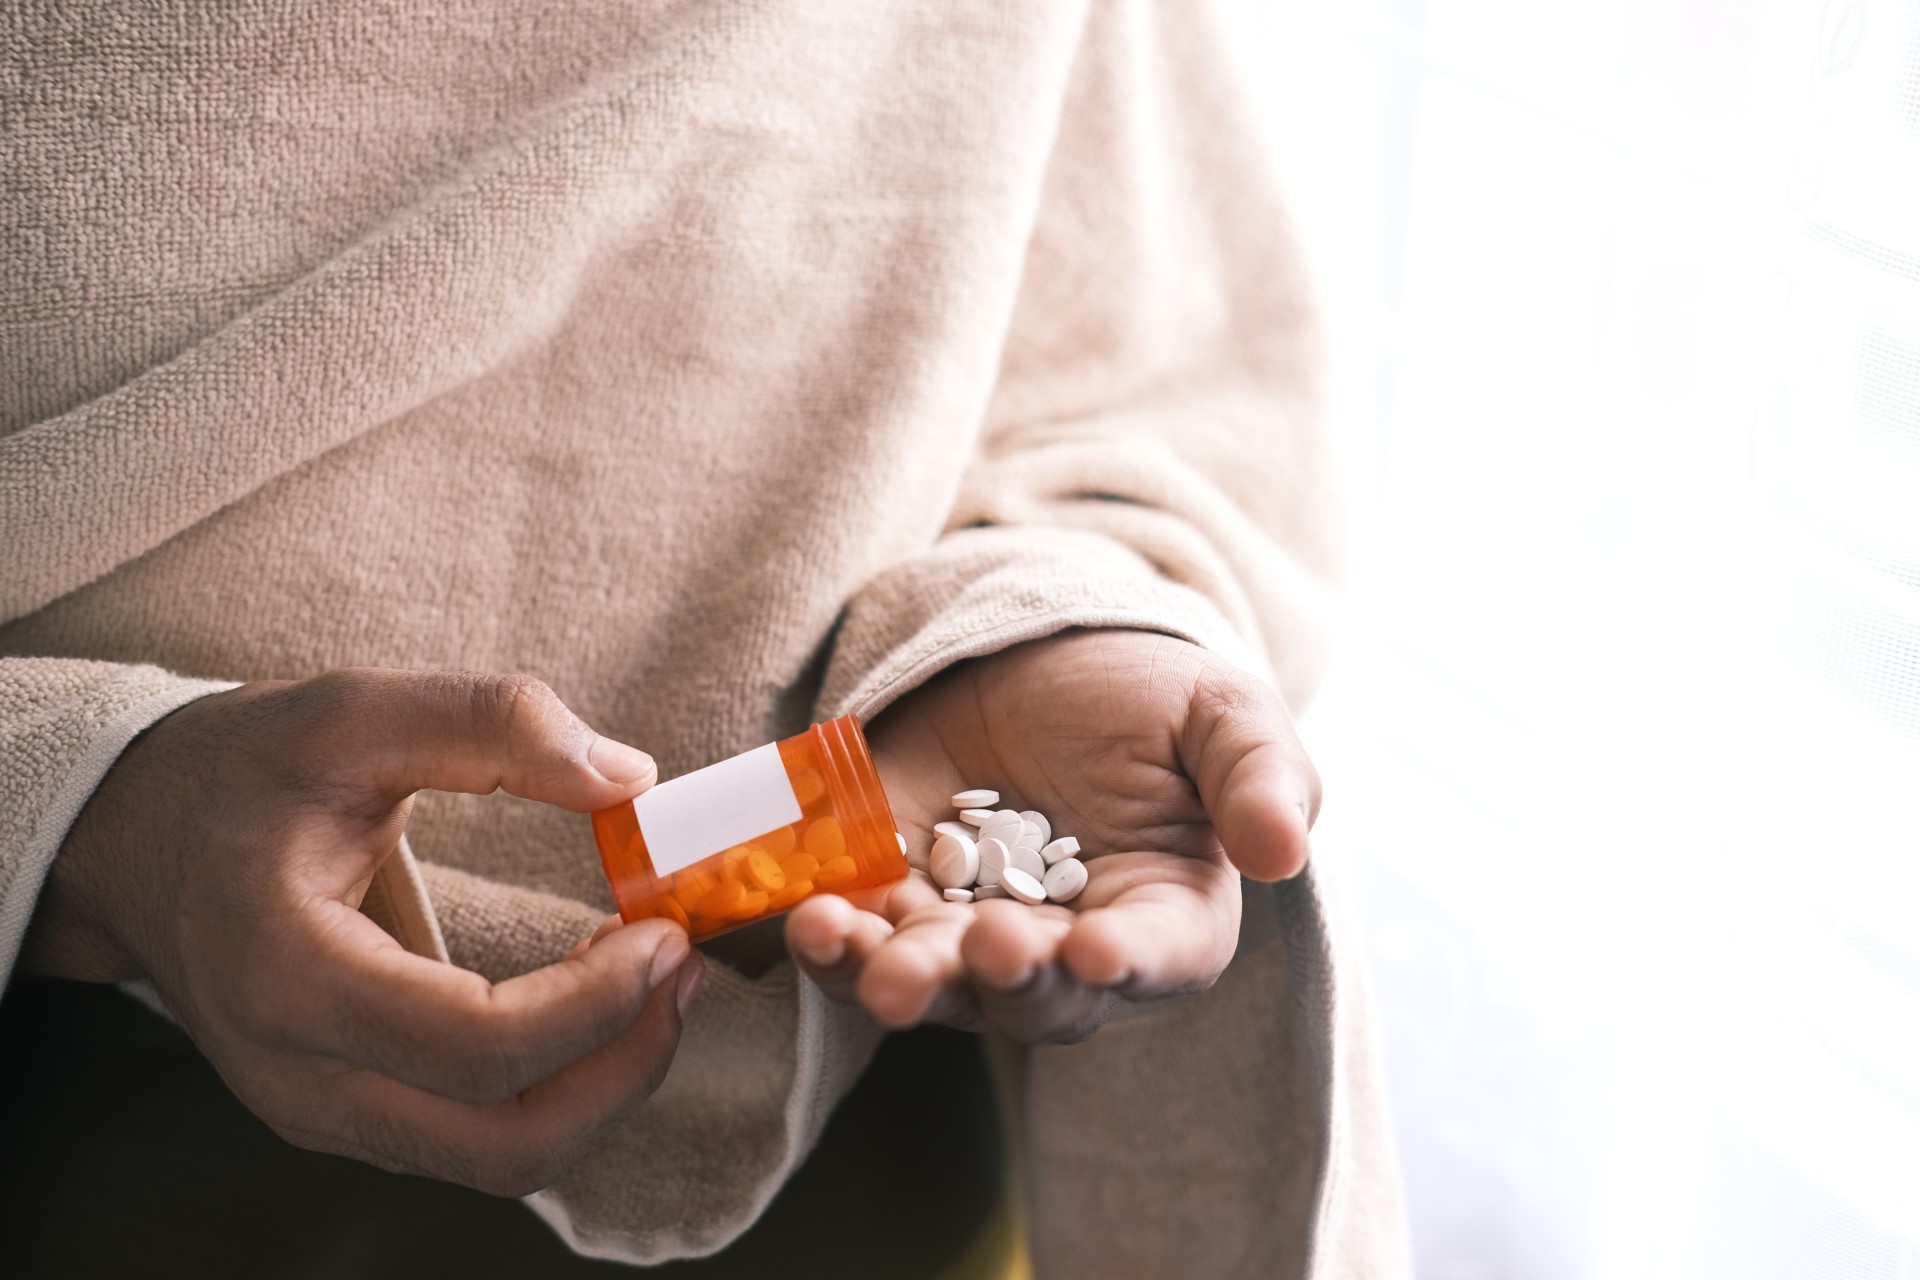 Person pouring prescription medication pills into hand